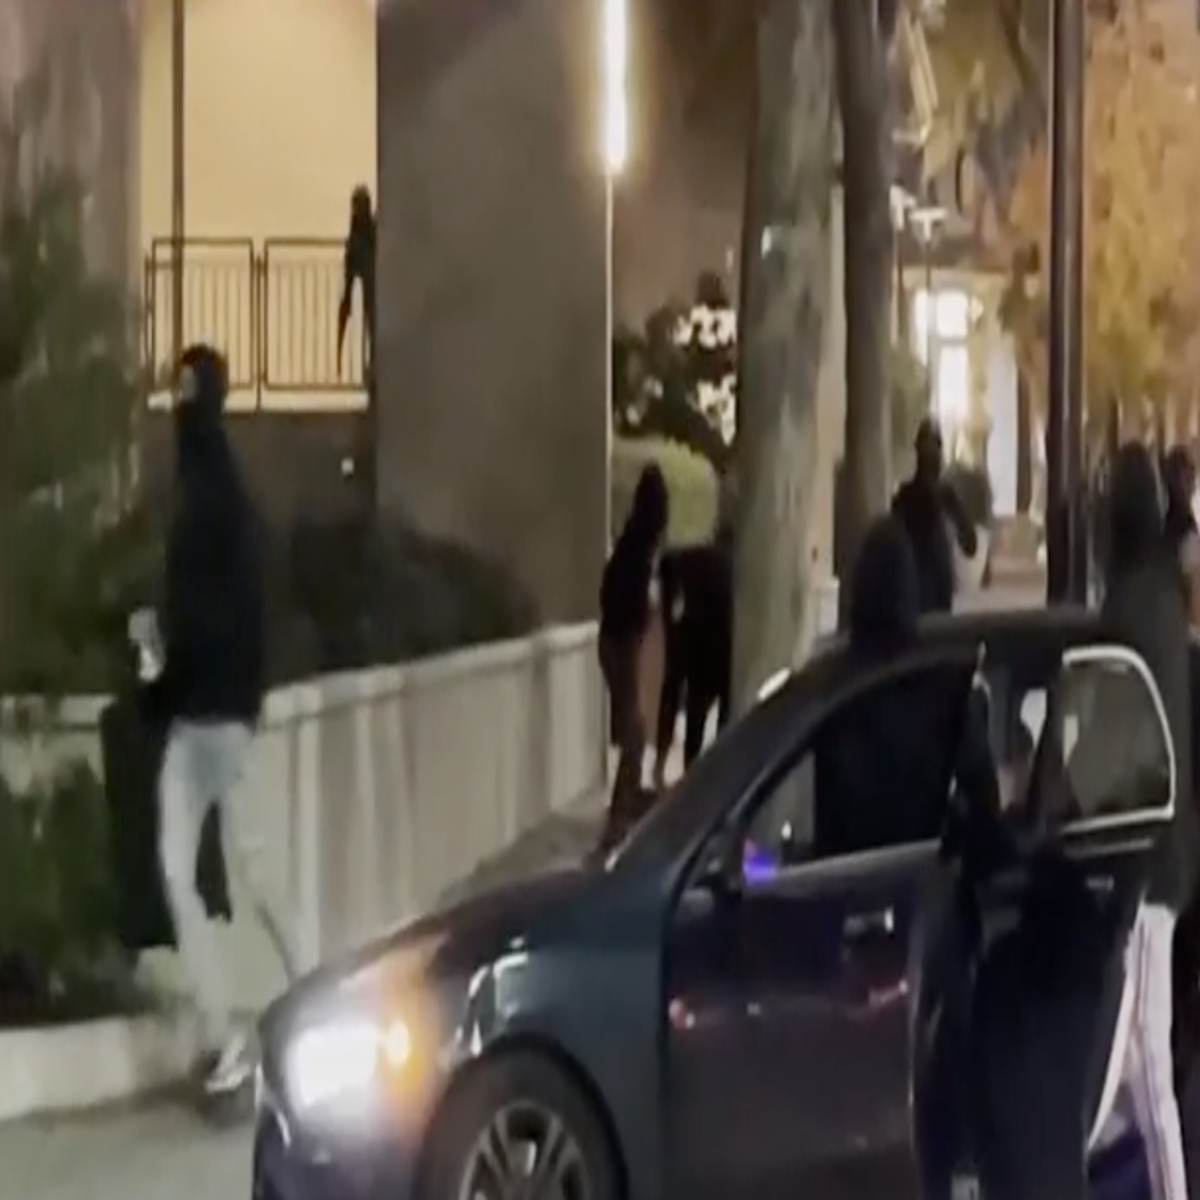 Video Brazen 'smash and grab' robbers target LA Nordstrom - ABC News